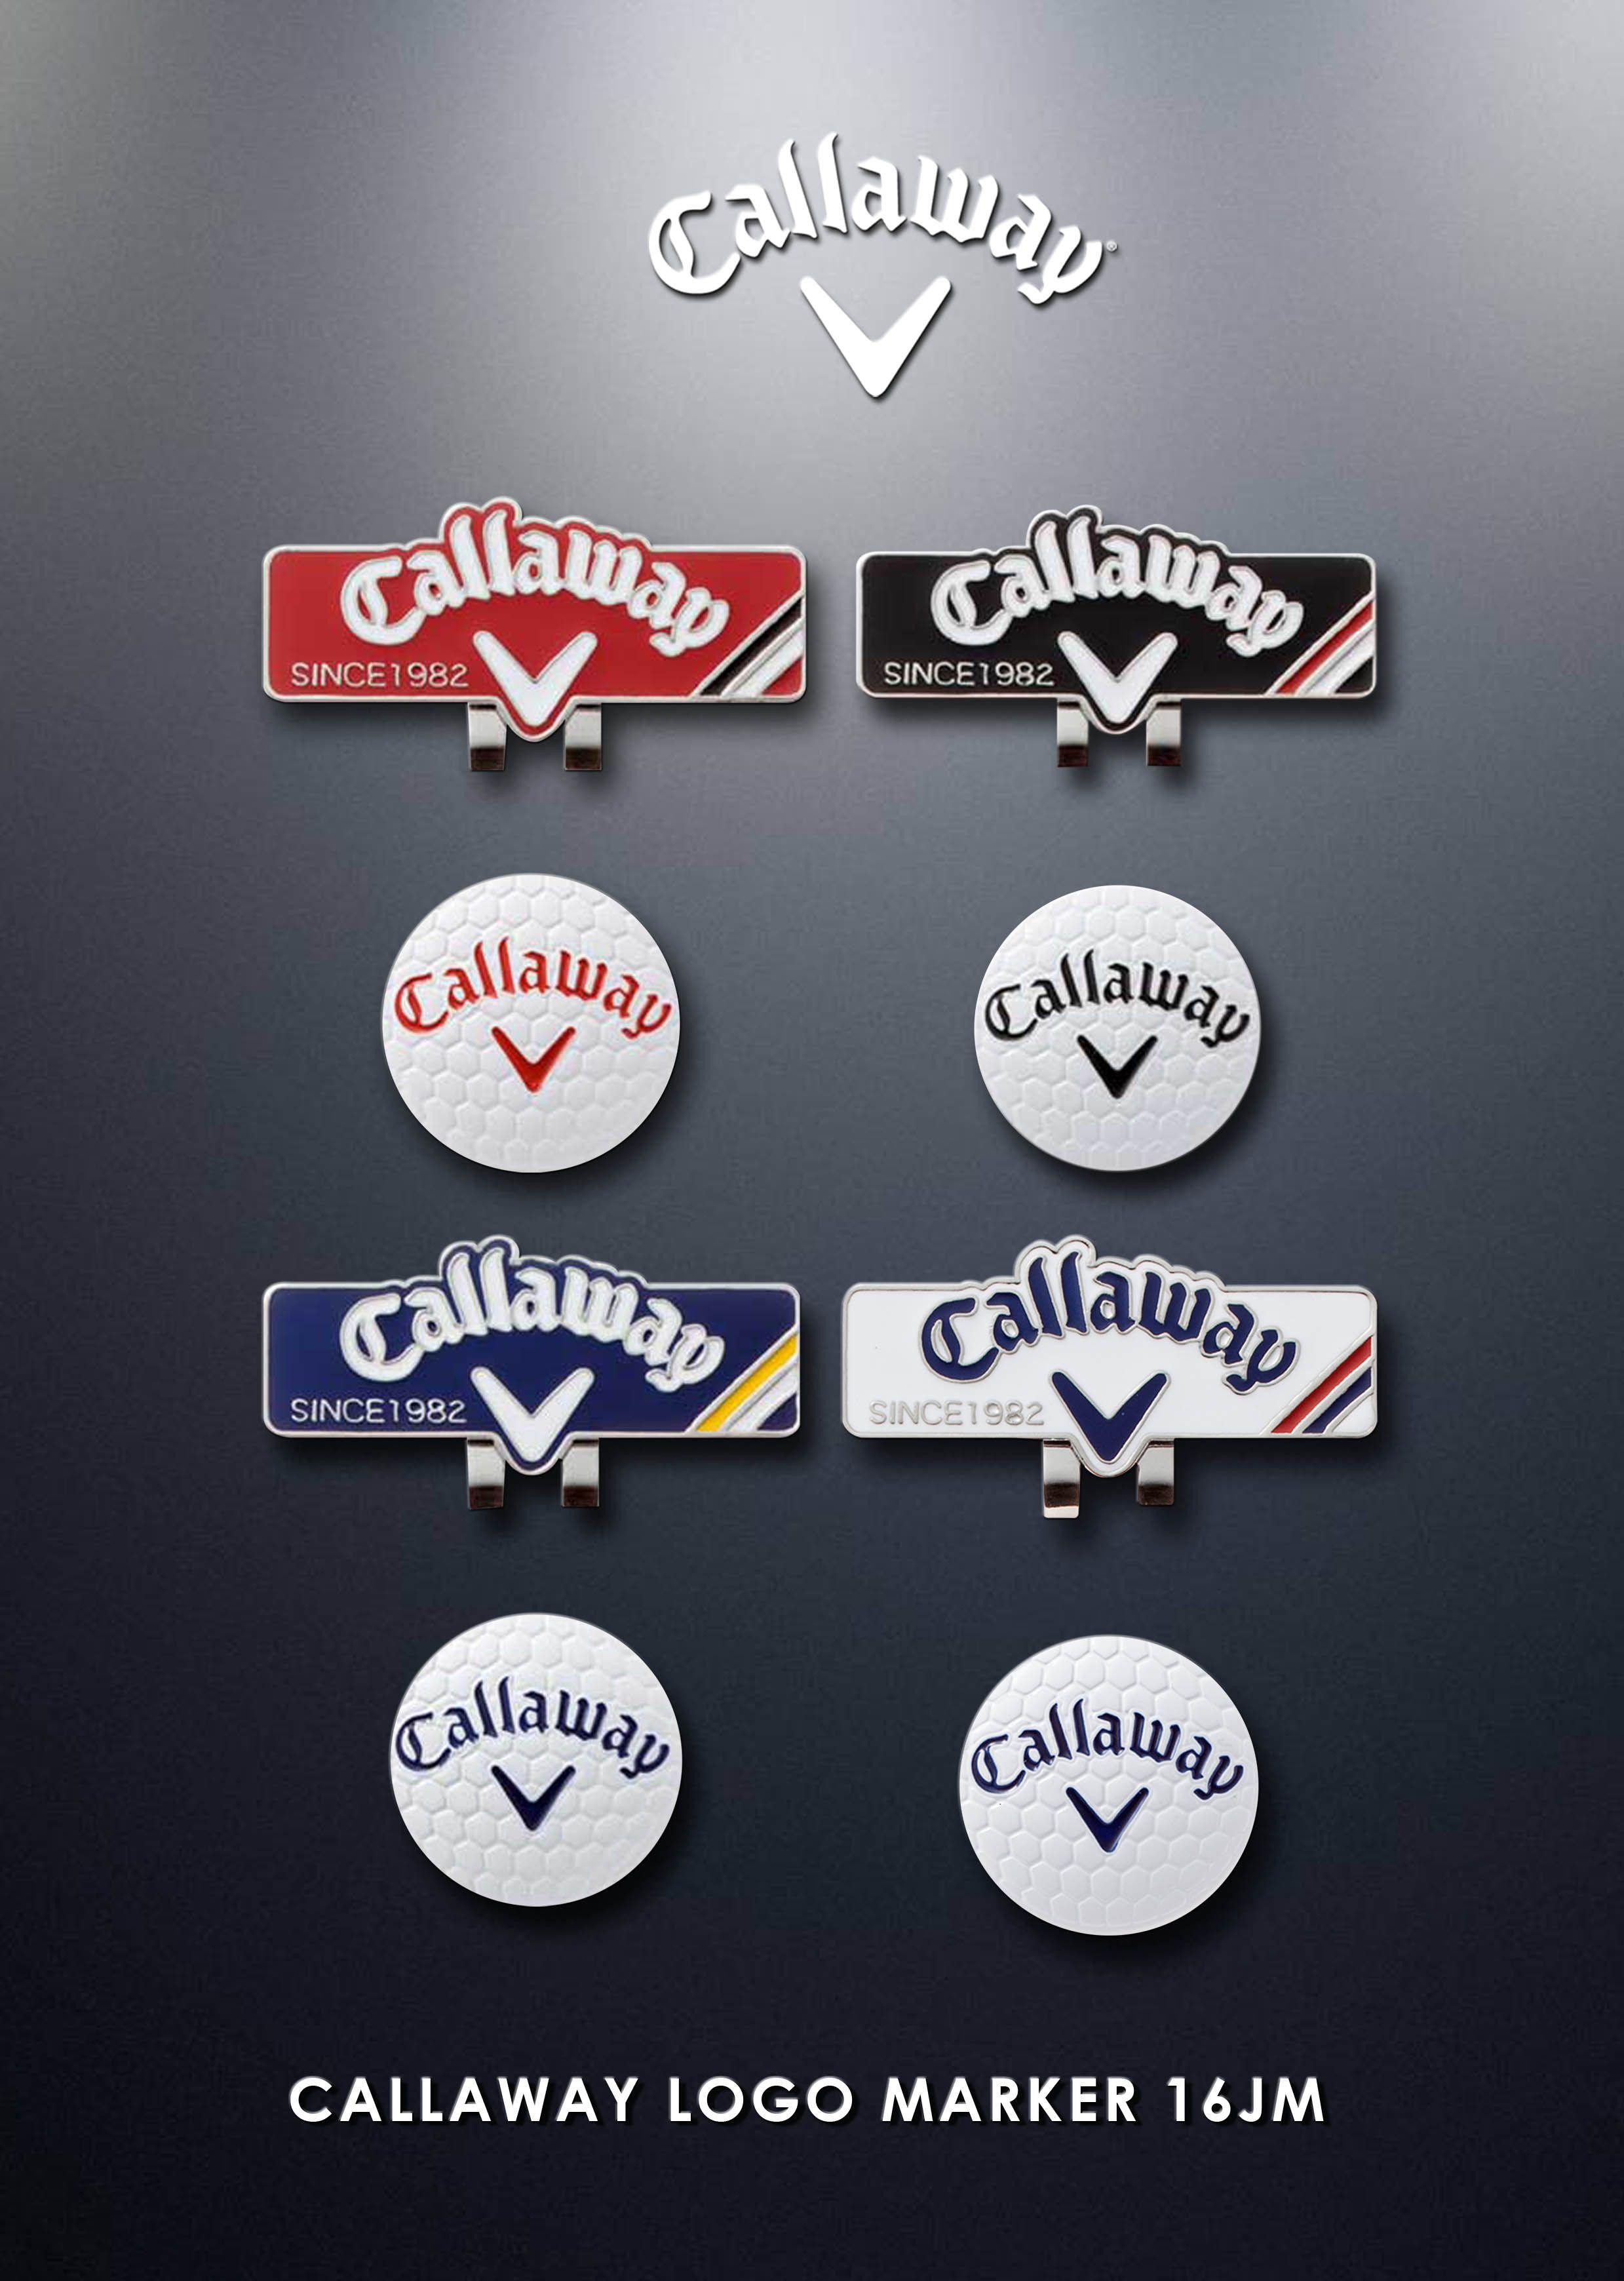 Calloway Logo - CALLAWAY LOGO MARKER 16JM | Distributor of Golf Equipments ...